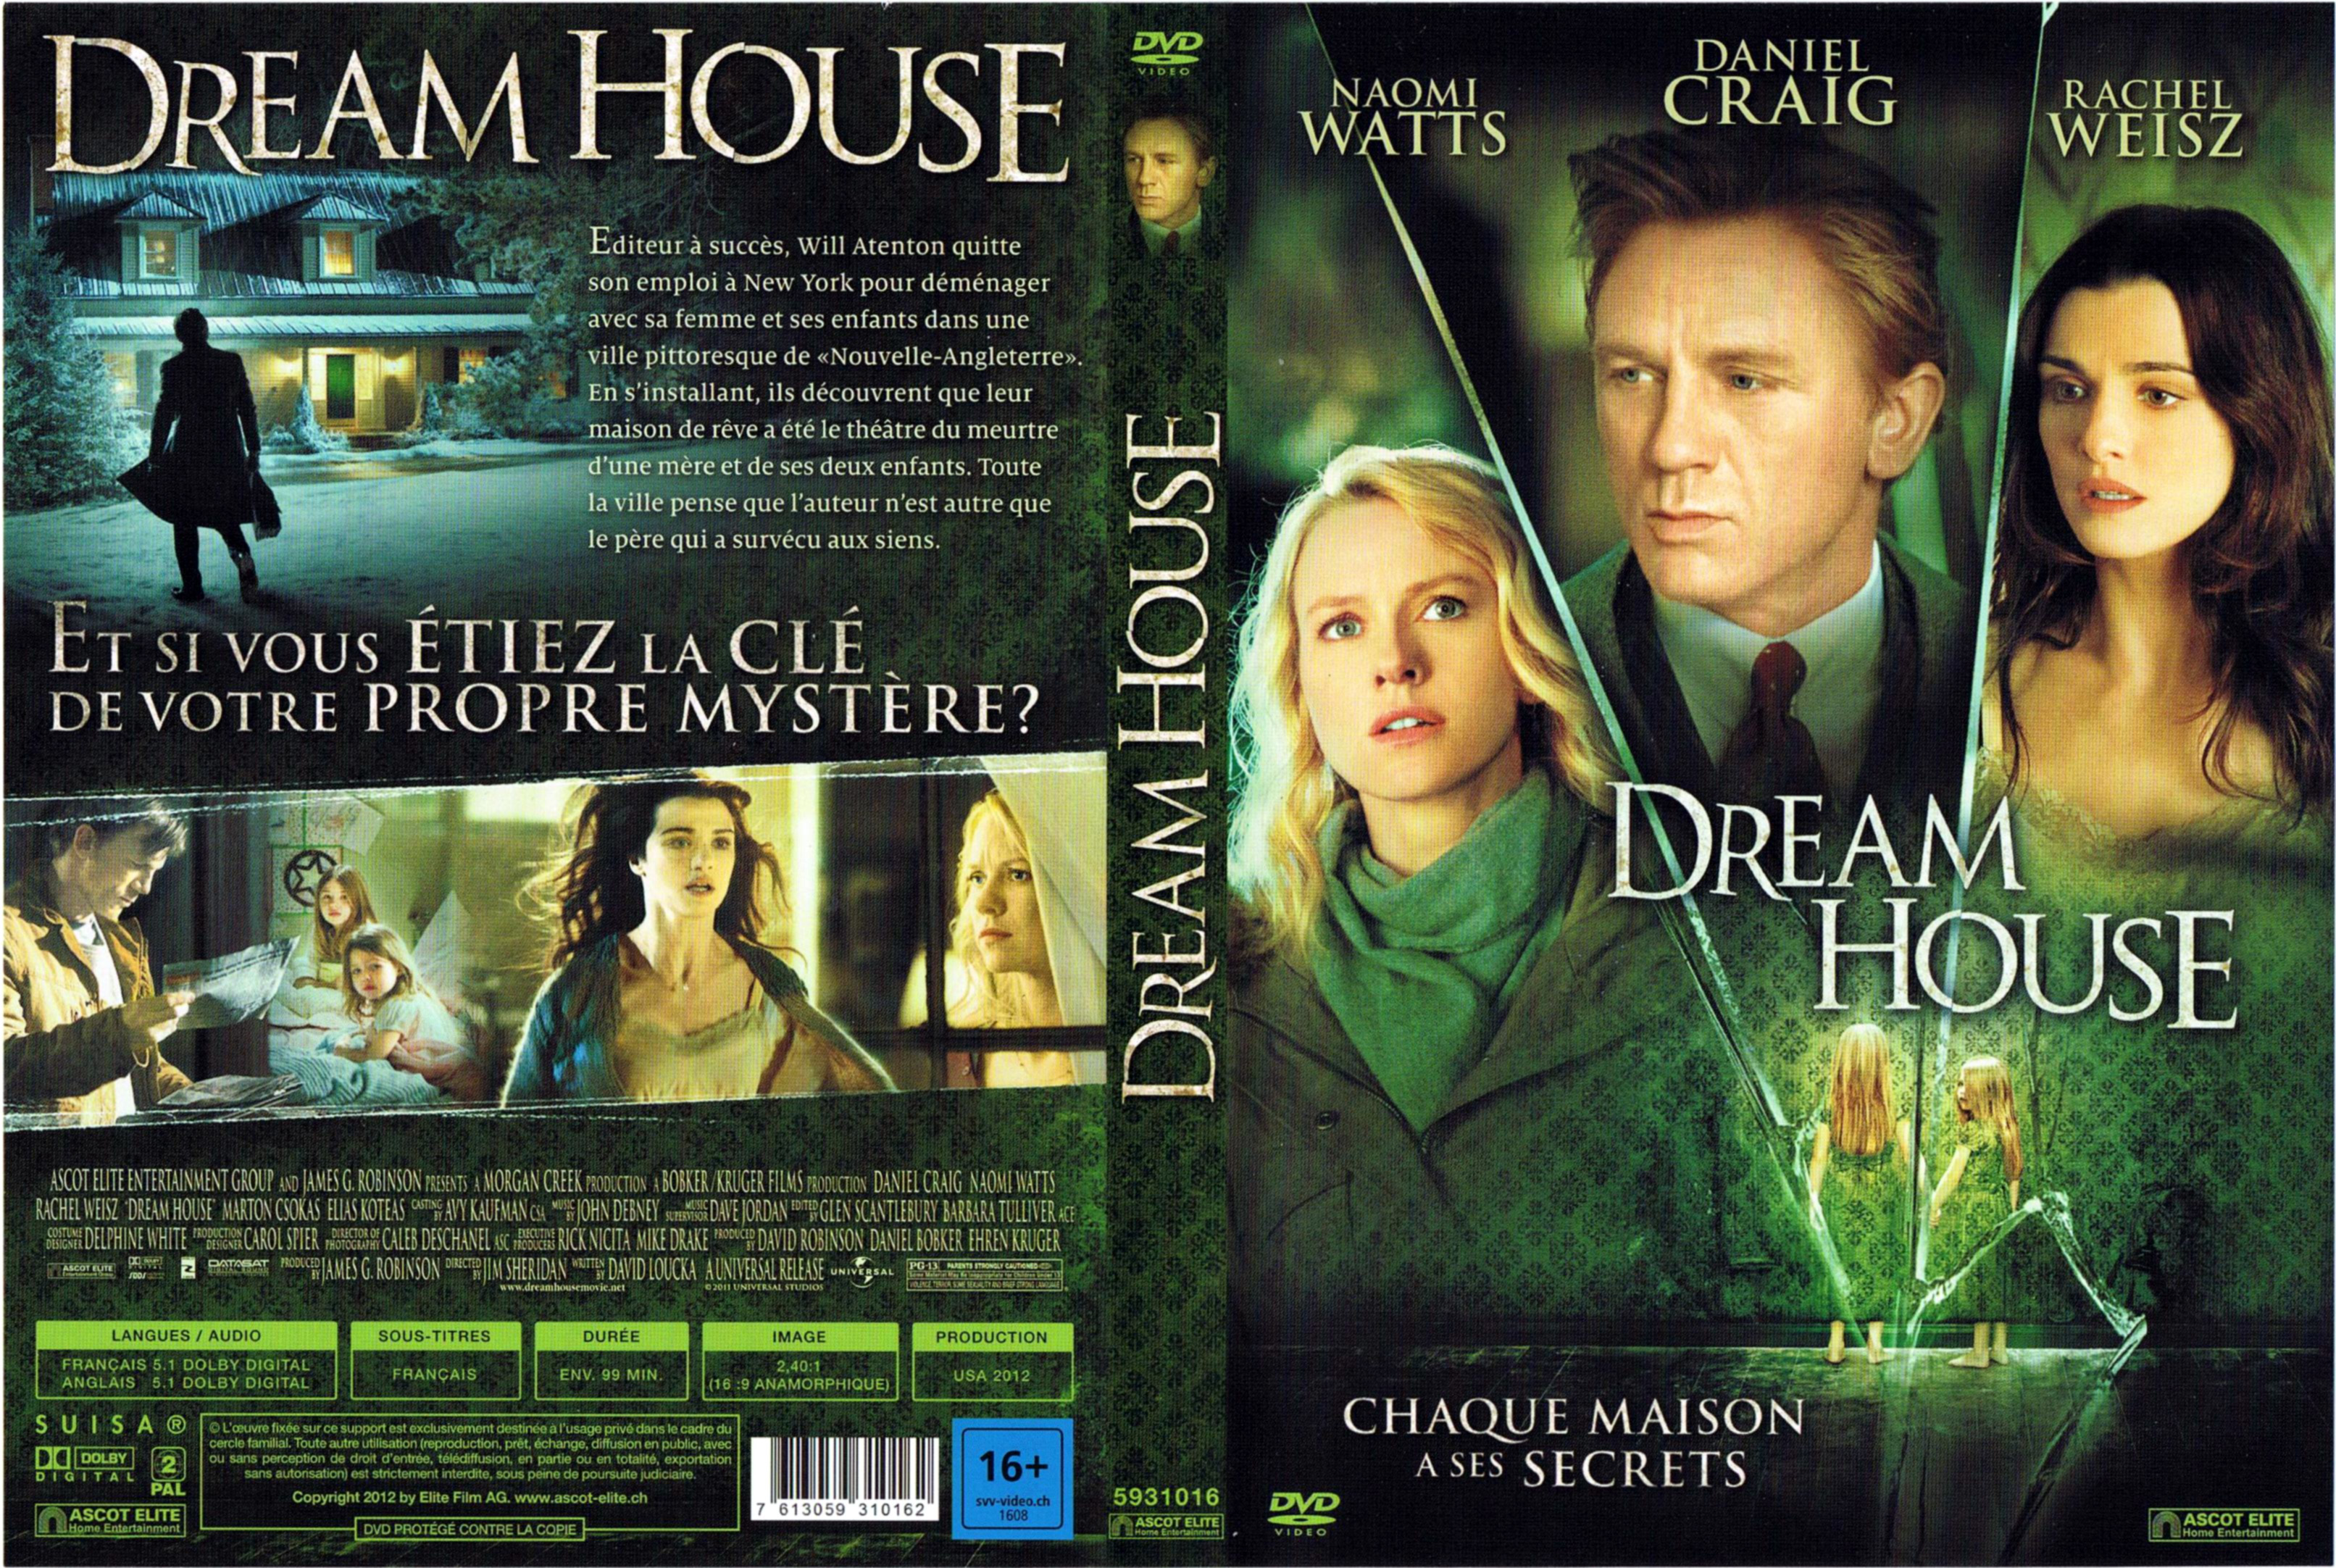 Jaquette DVD Dream house